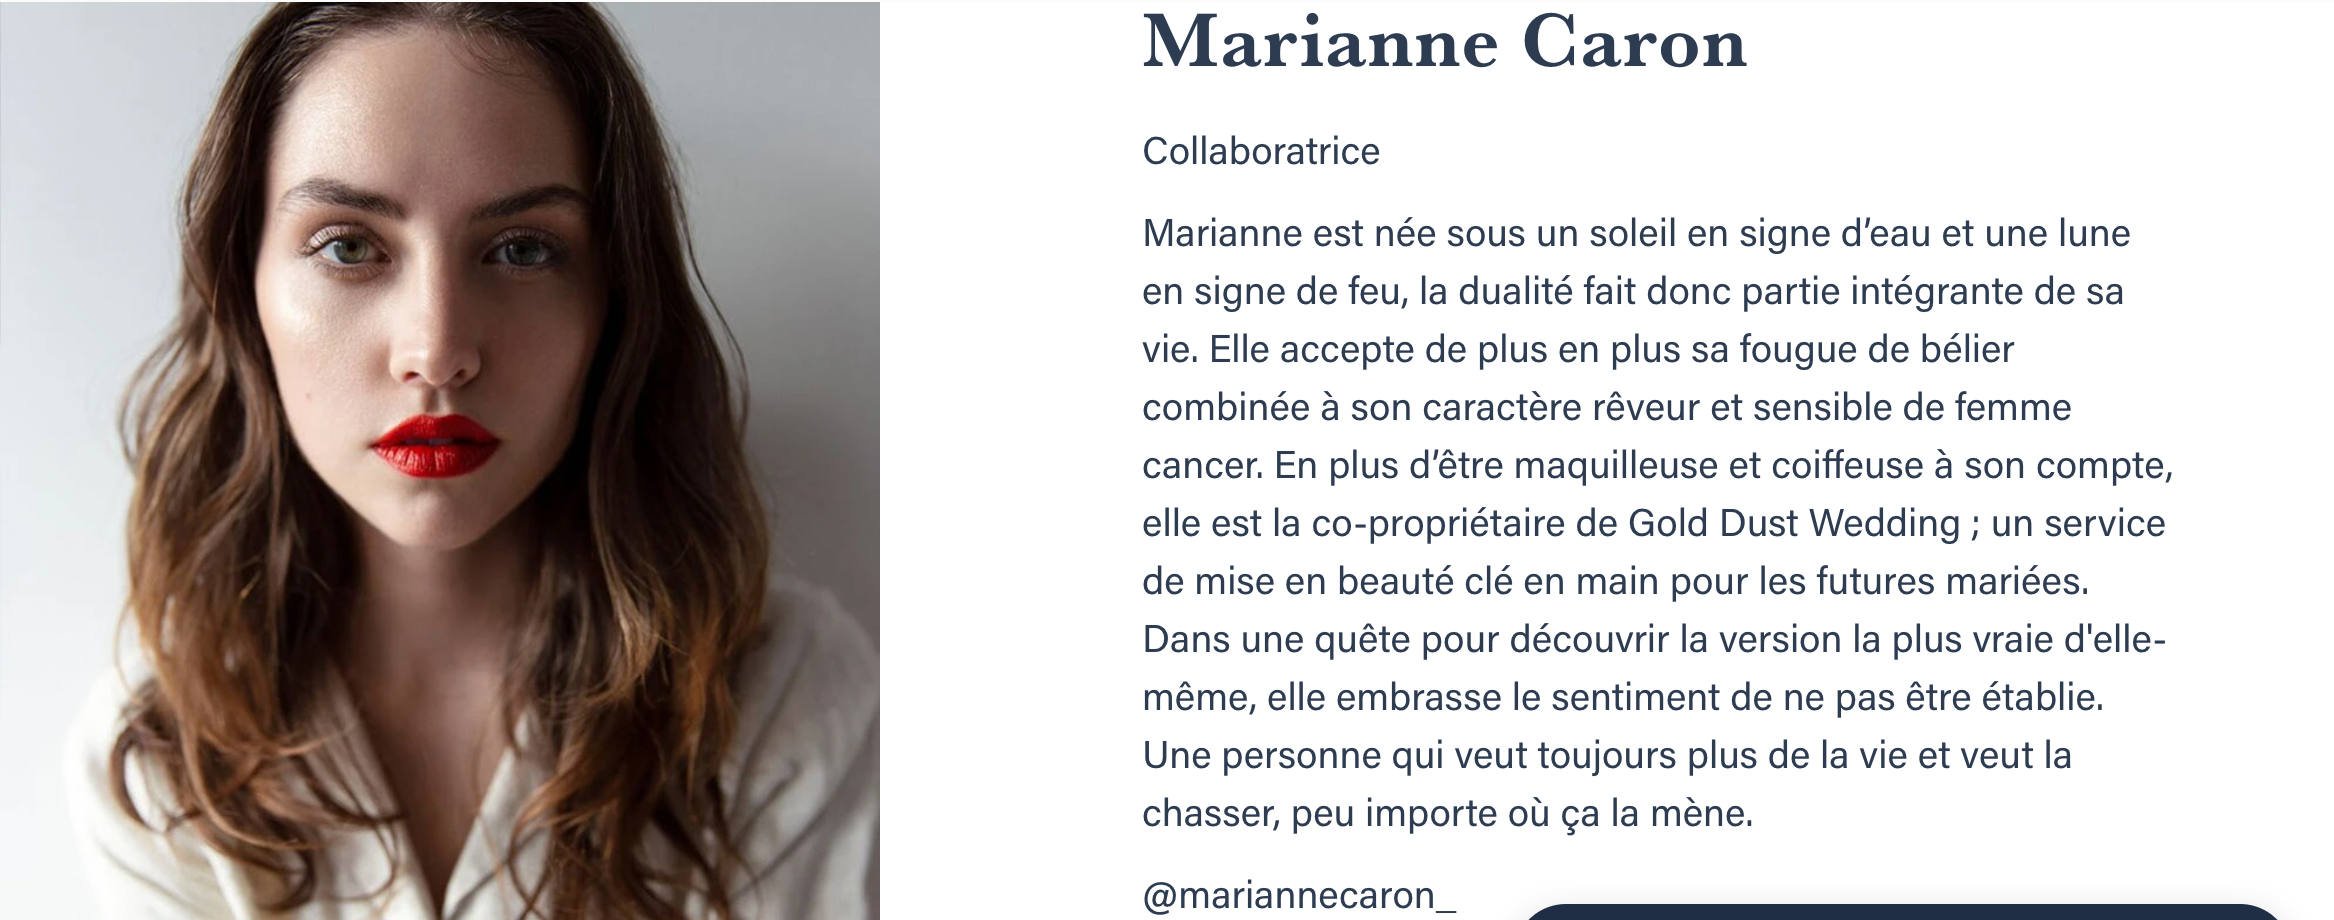 Marianne Caron